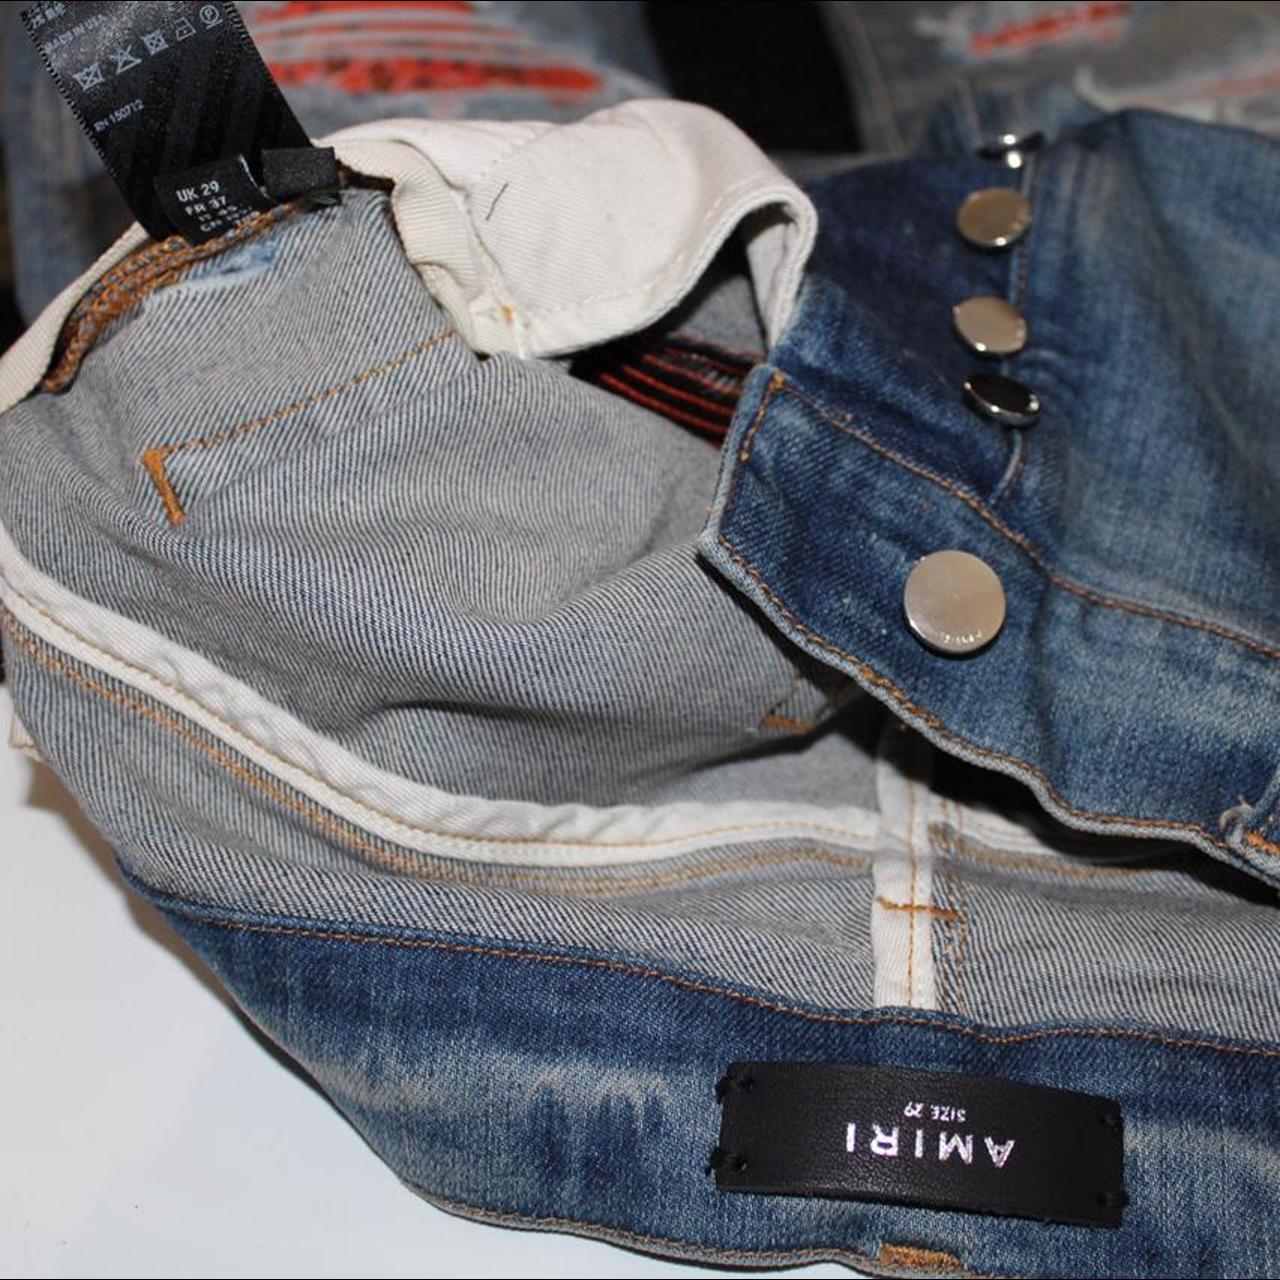 Product Image 3 - Amiri bandana skinny jeans

Details
Inseam: 34"
Rise: